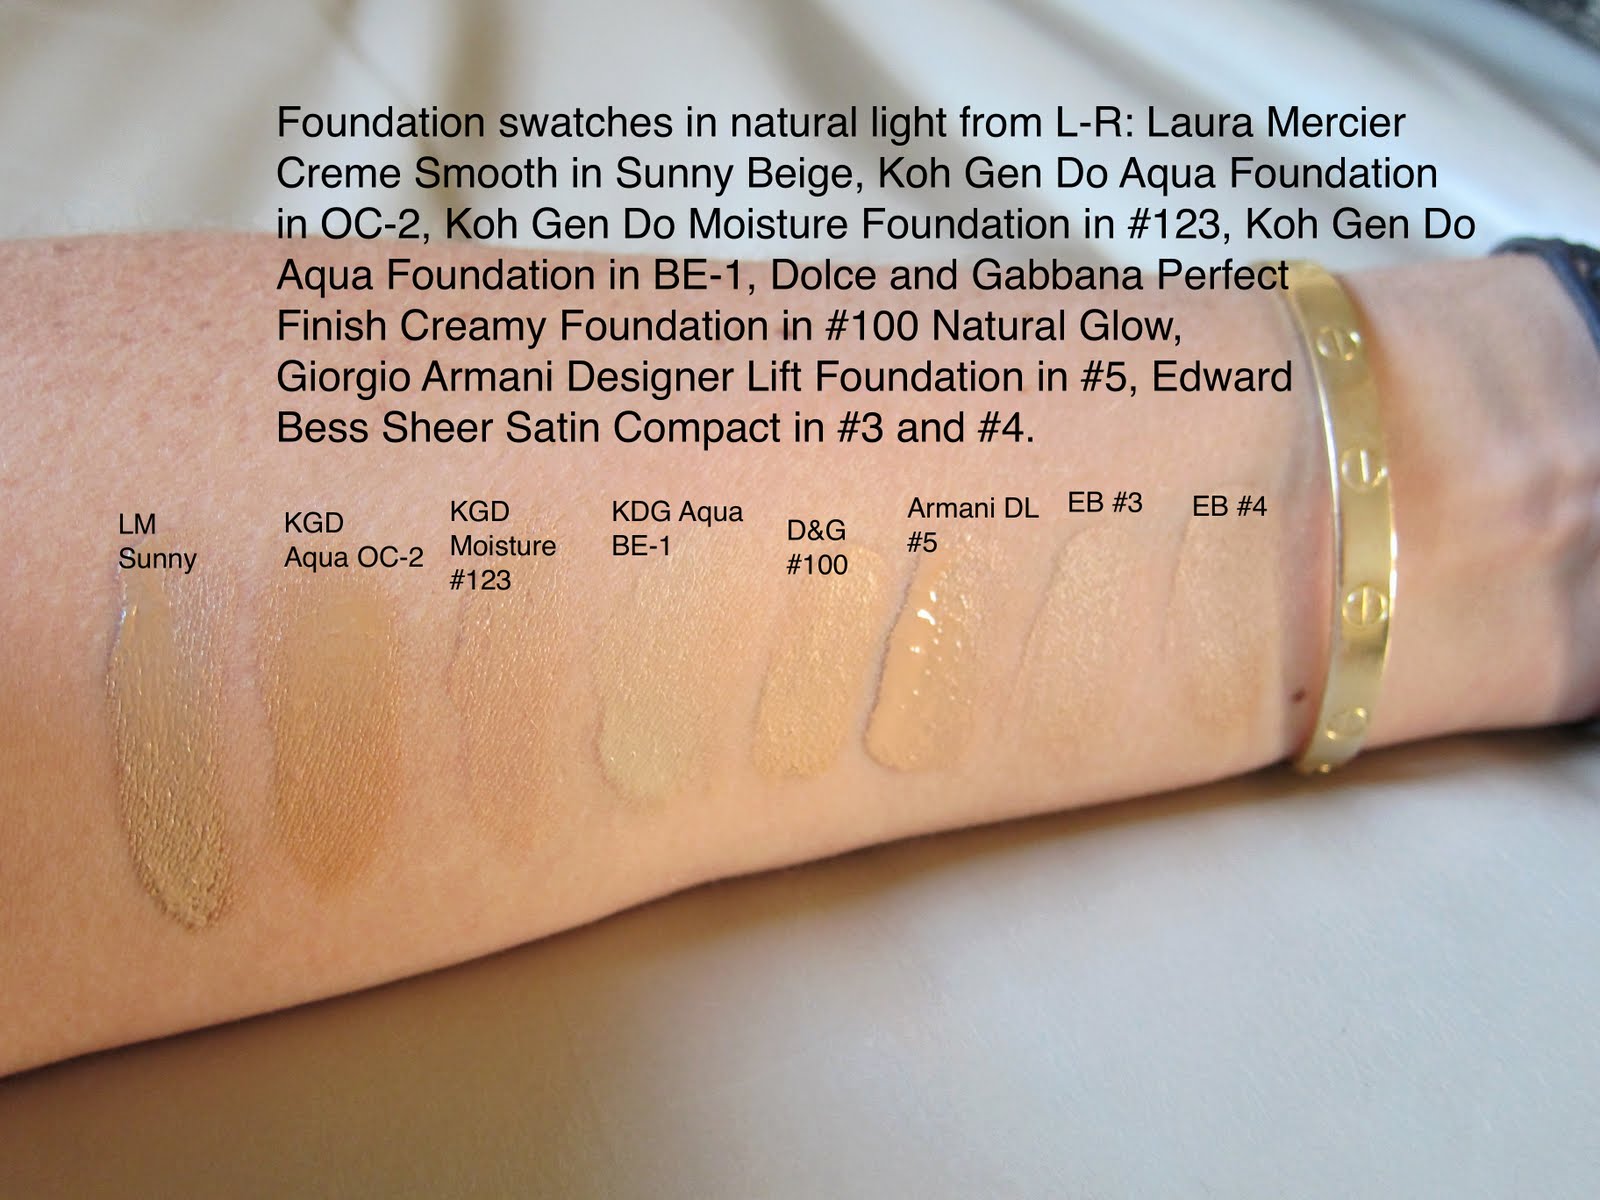 giorgio armani designer lift foundation colour match